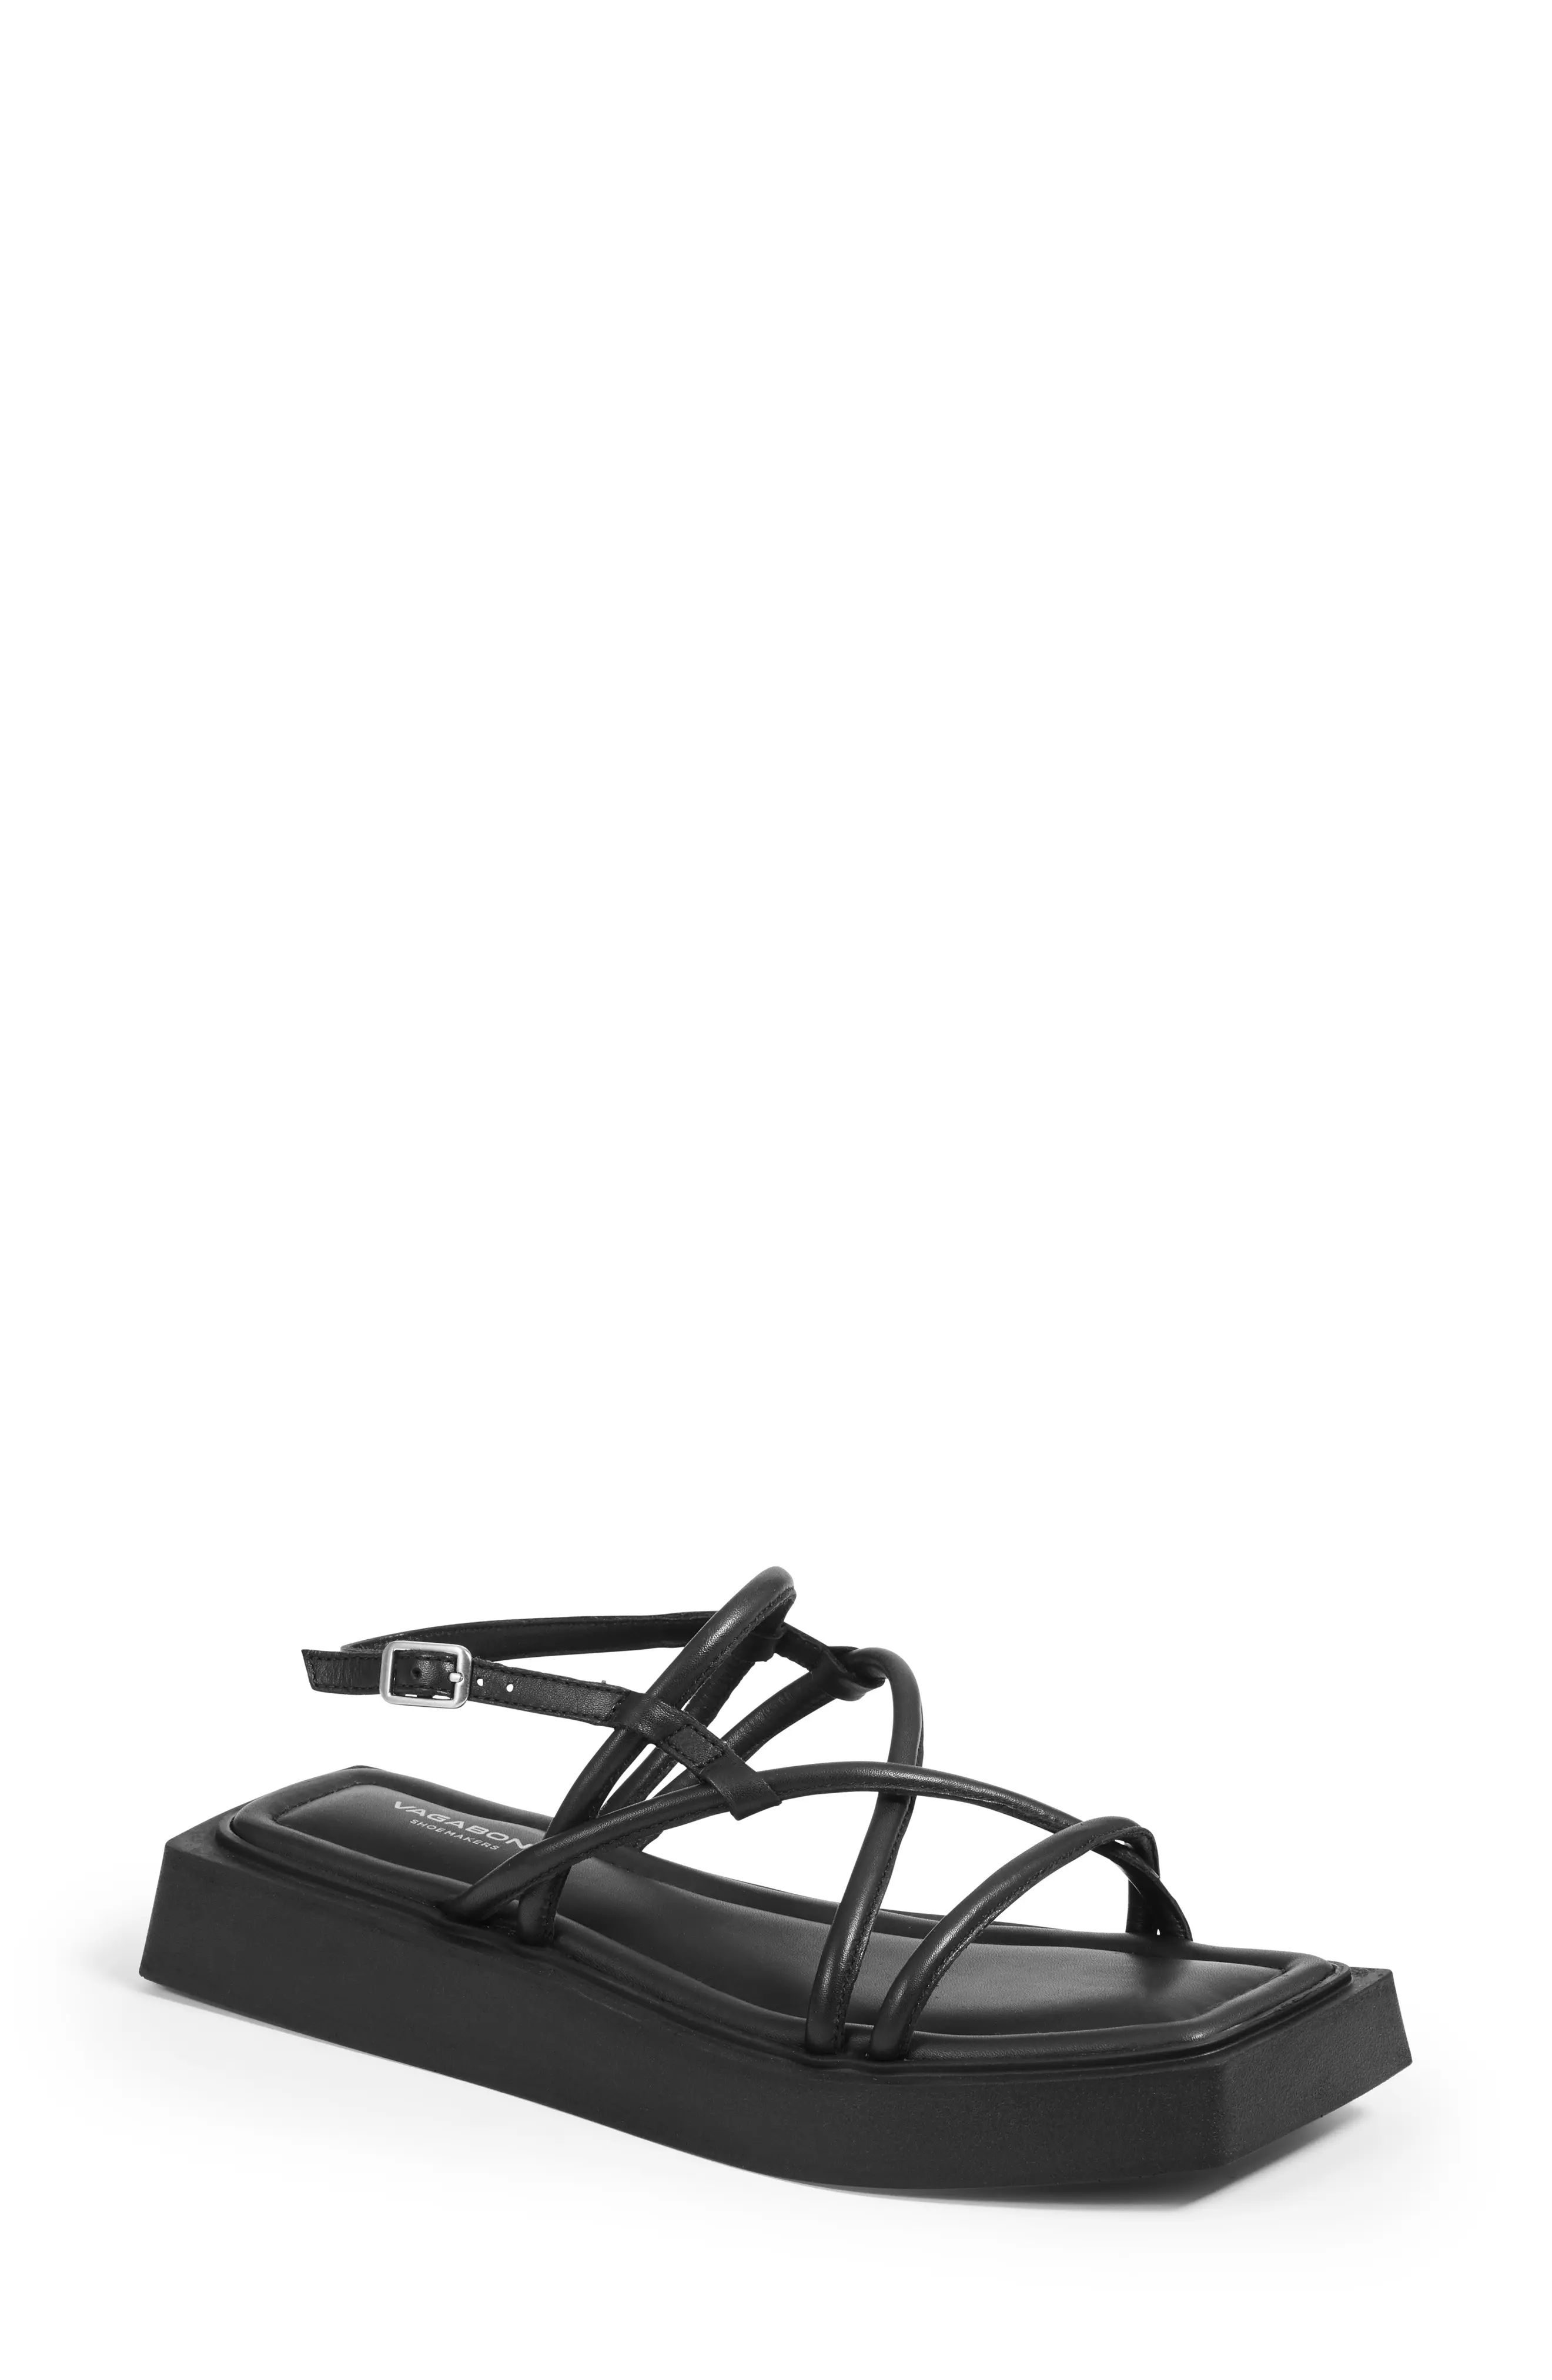 Vagabond Shoemakers Evy Strappy Sandal in Black at Nordstrom, Size 11Us | Nordstrom